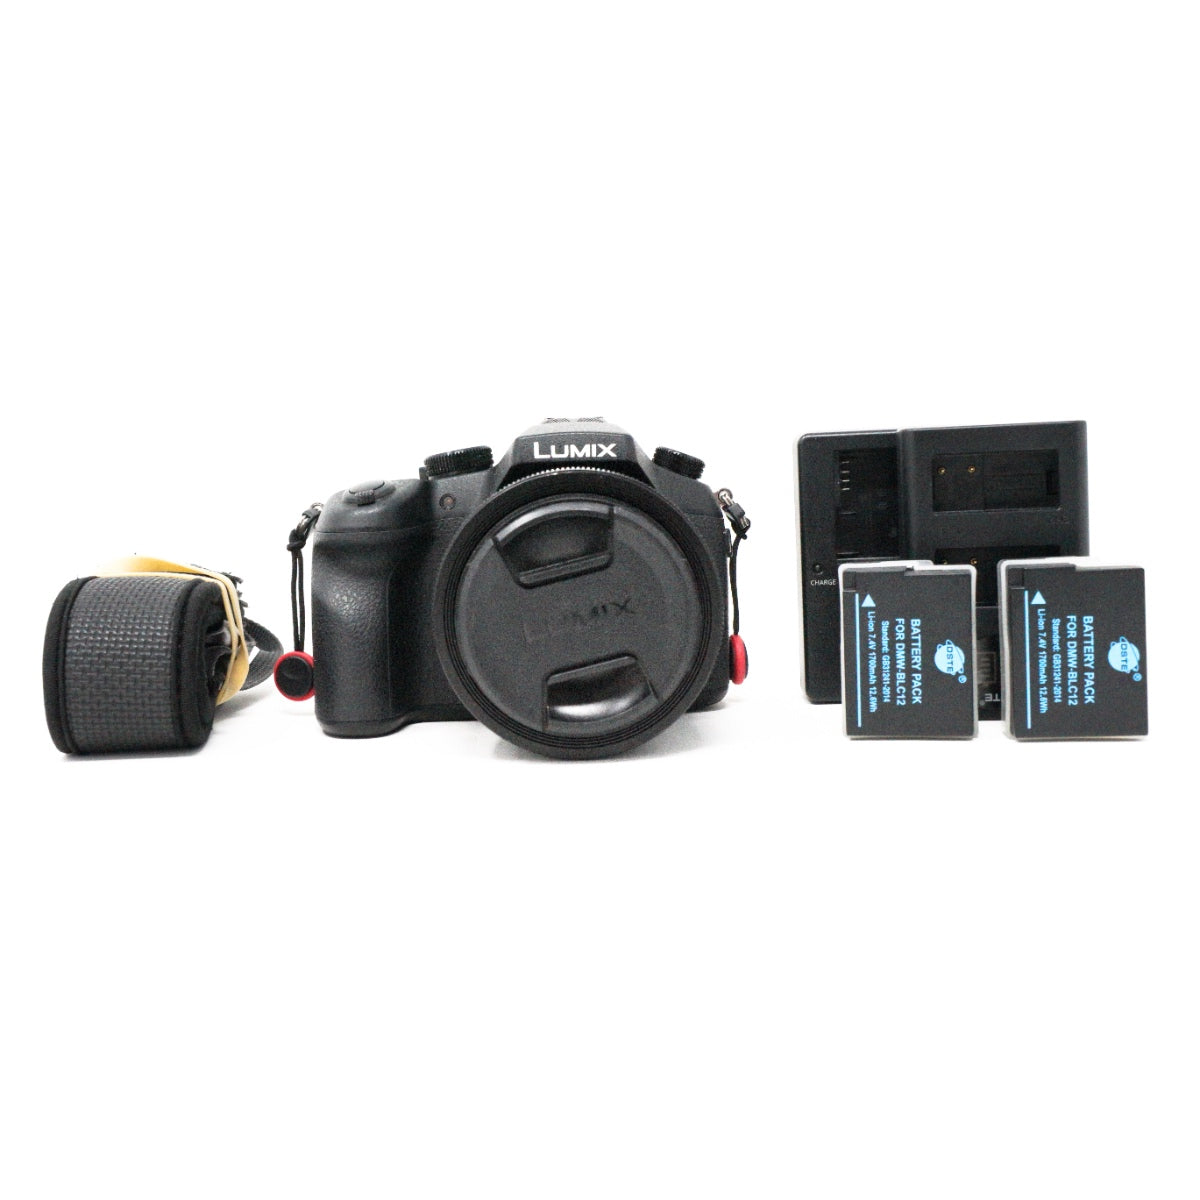 Used Panasonic DMC-FZ1000 Digital bridge camera